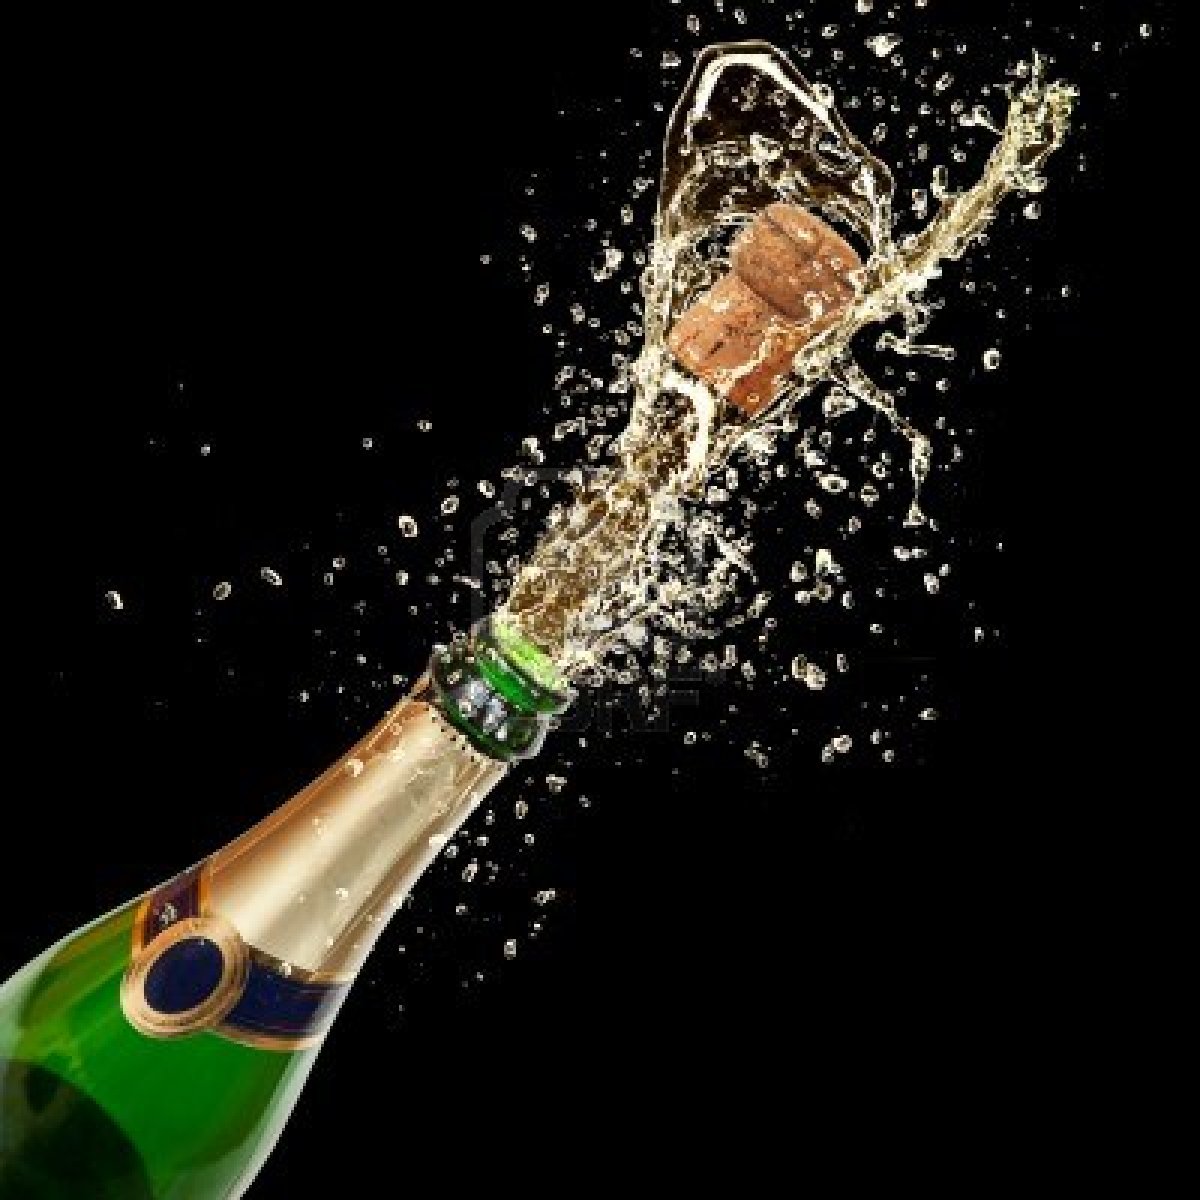 popping-champagne-photo-credit-www-sodahead-com.jpg